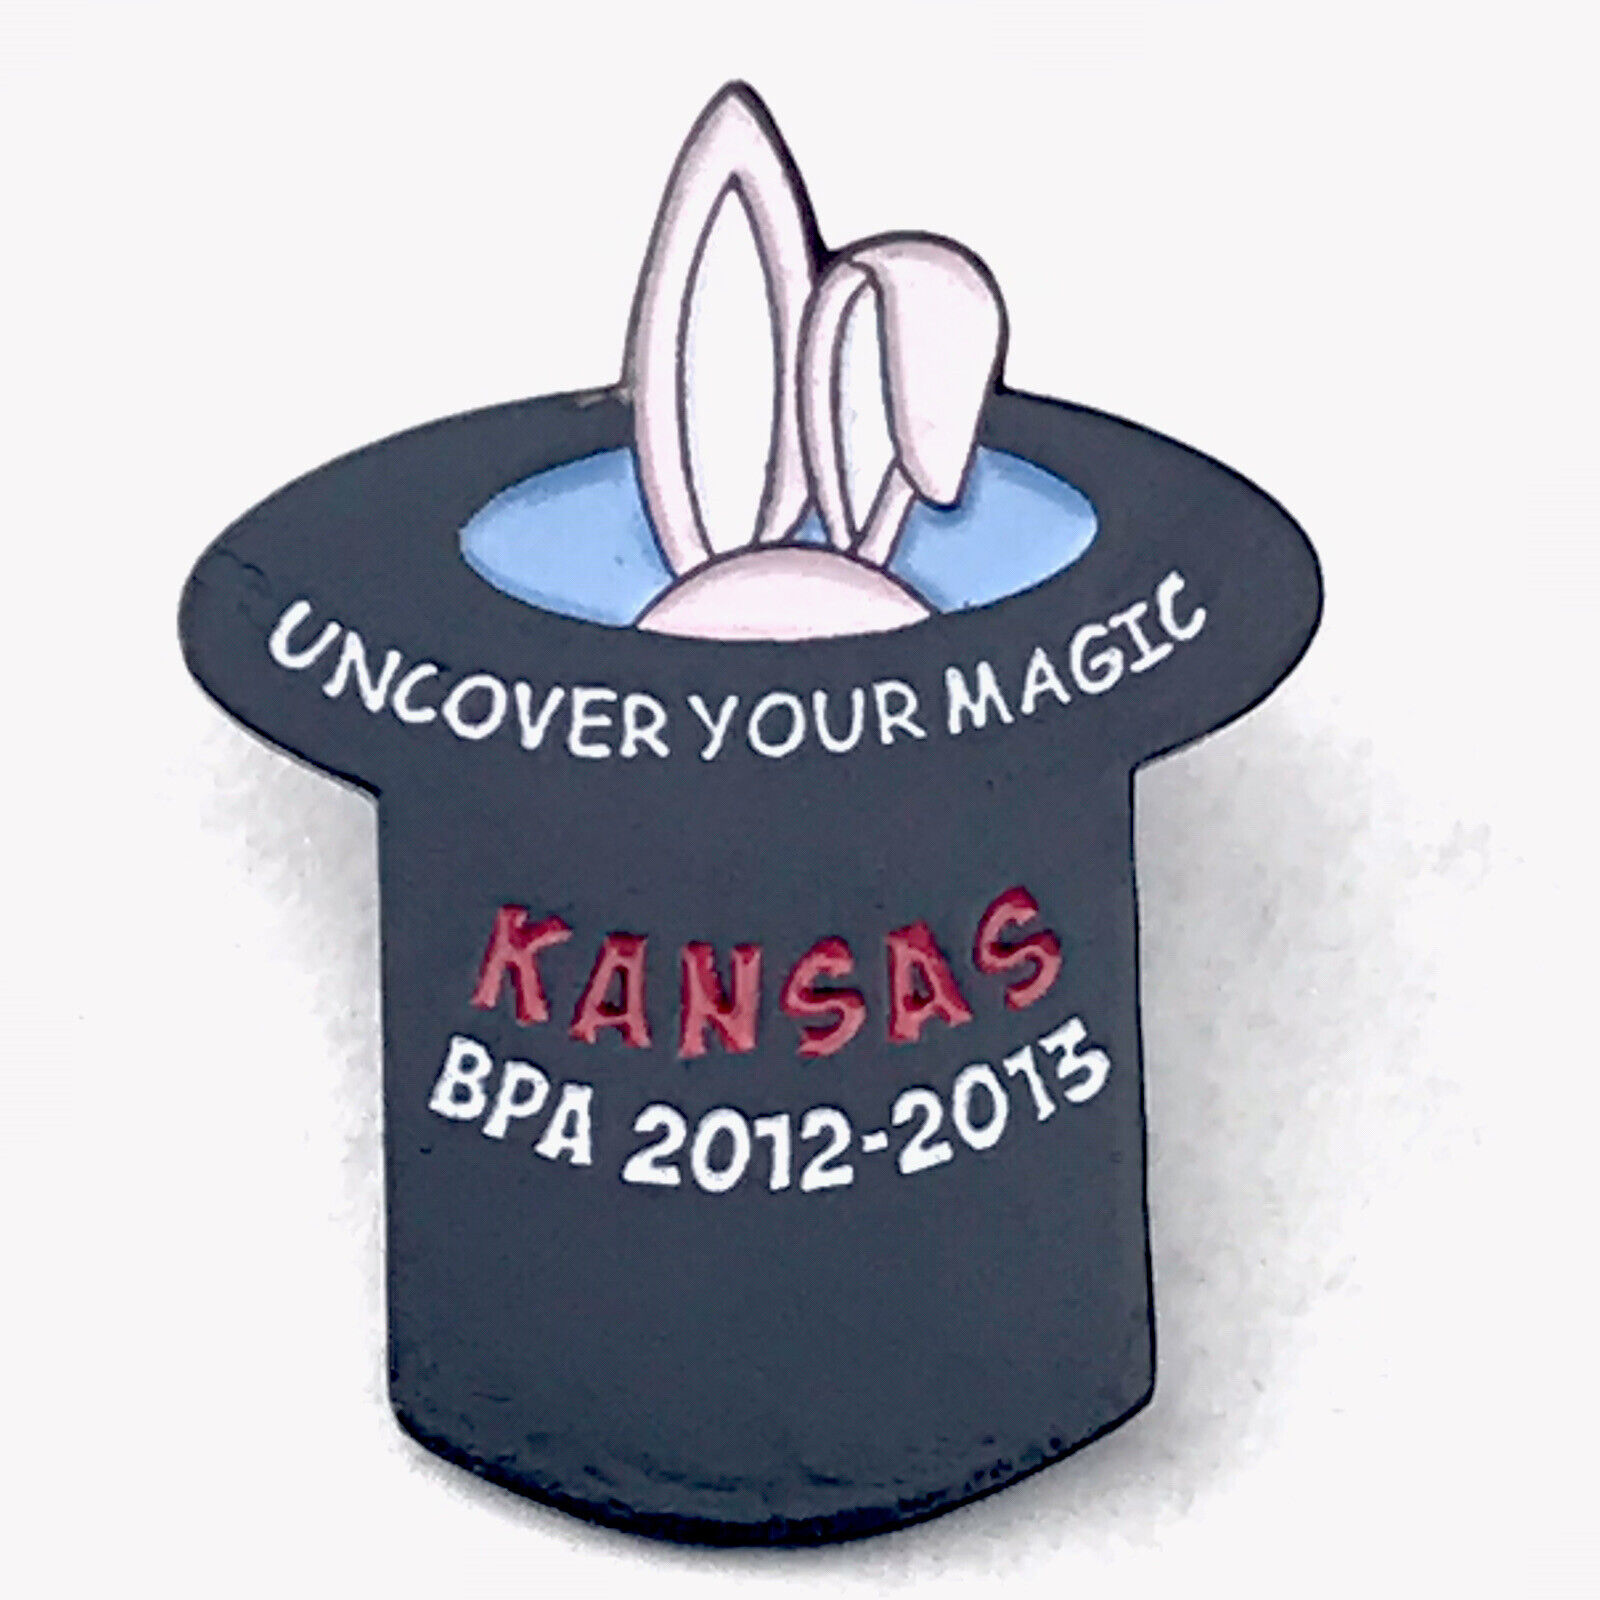 BPA Kansas Uncover Your Magic Pin 2012-2013 Rabbit Magician Hat